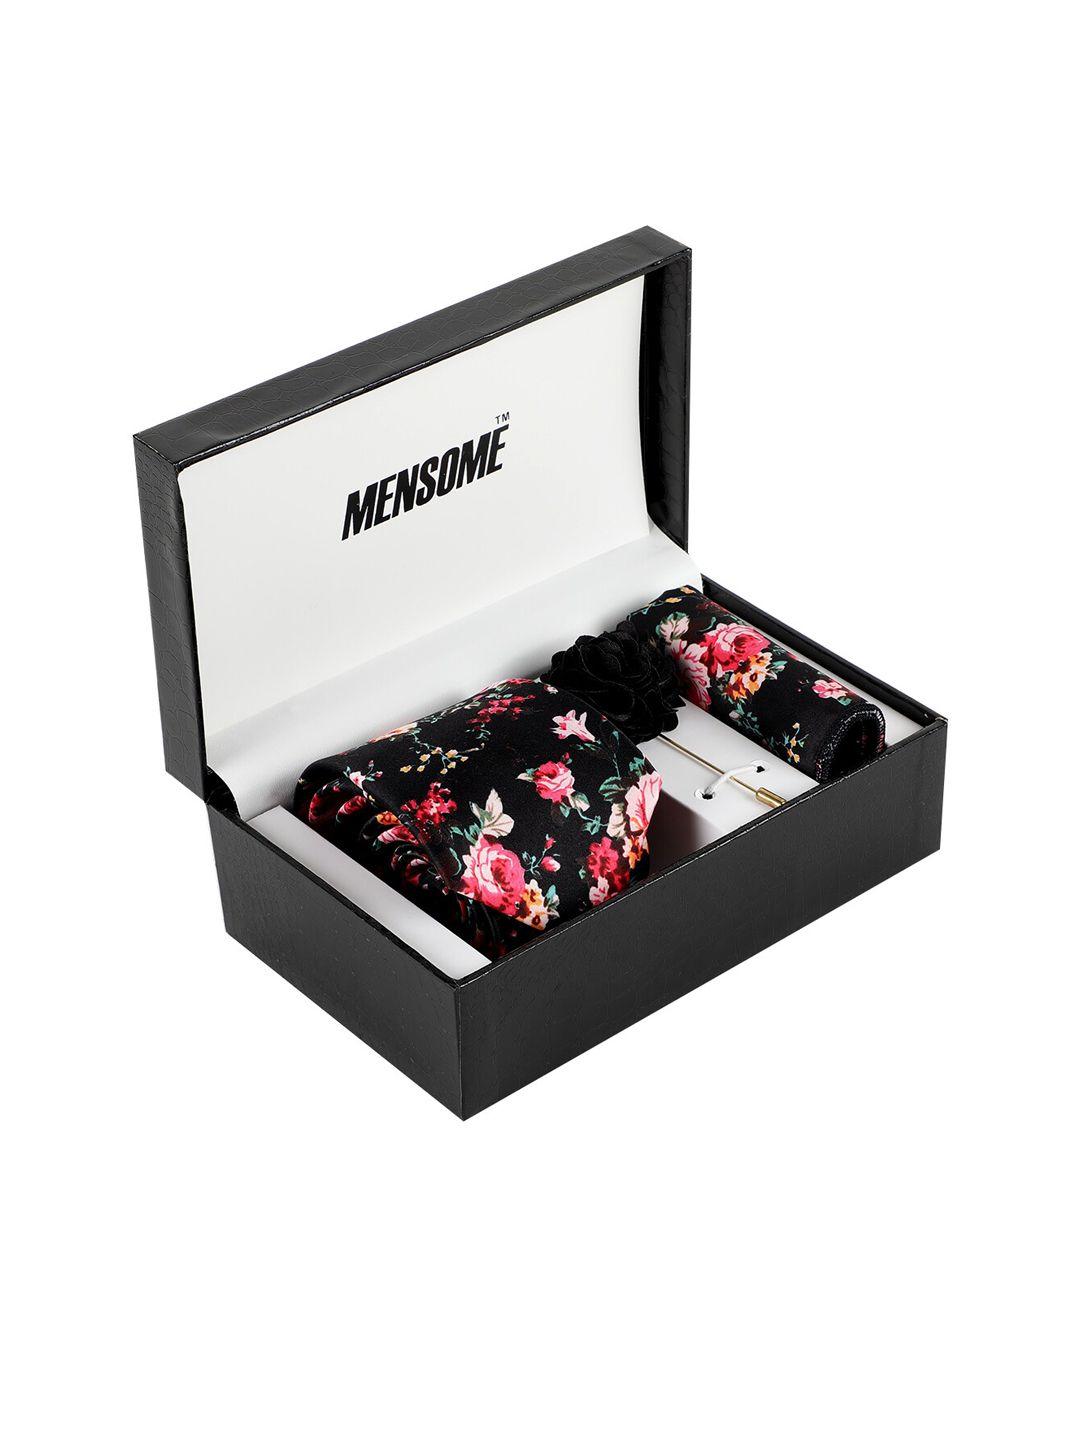 mensome men black & pink accessory gift set